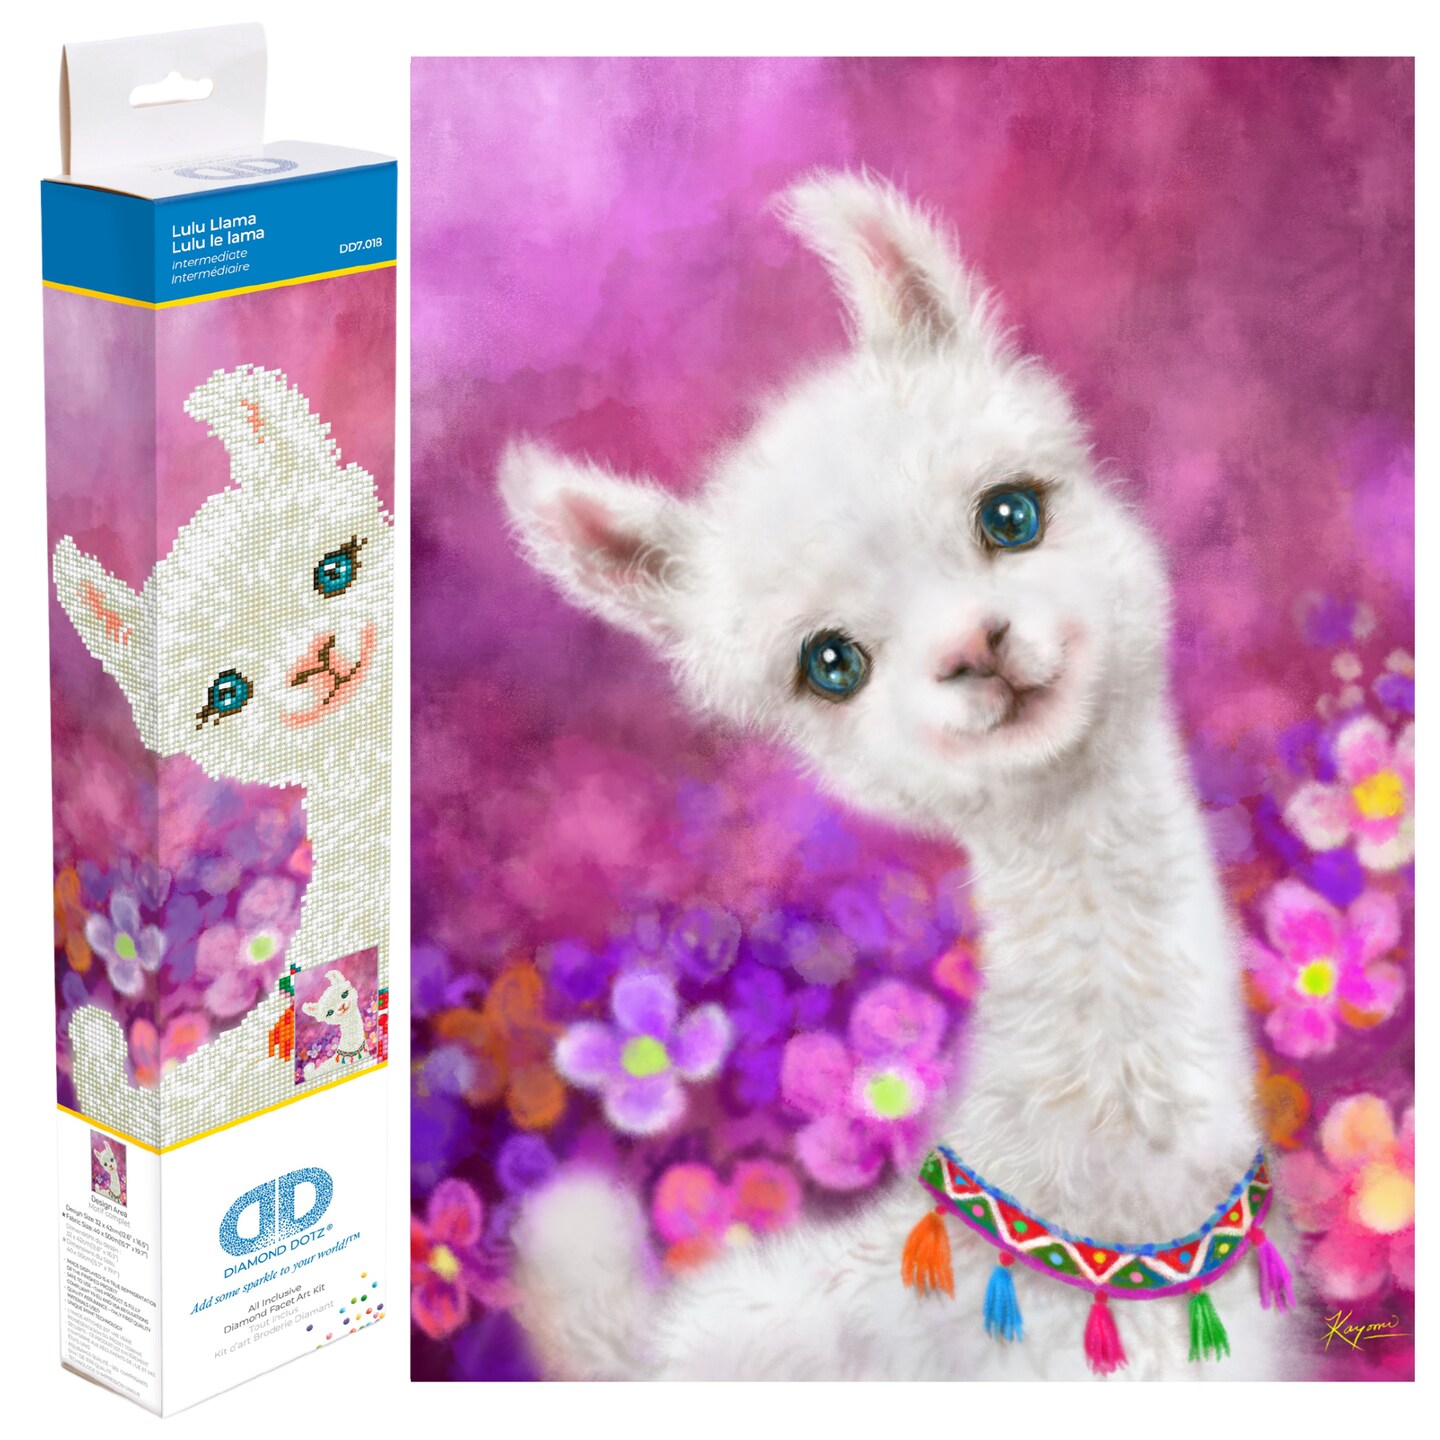 Diamond Painting Kits for Adults Hello Kitty Diamond Art Gem Art